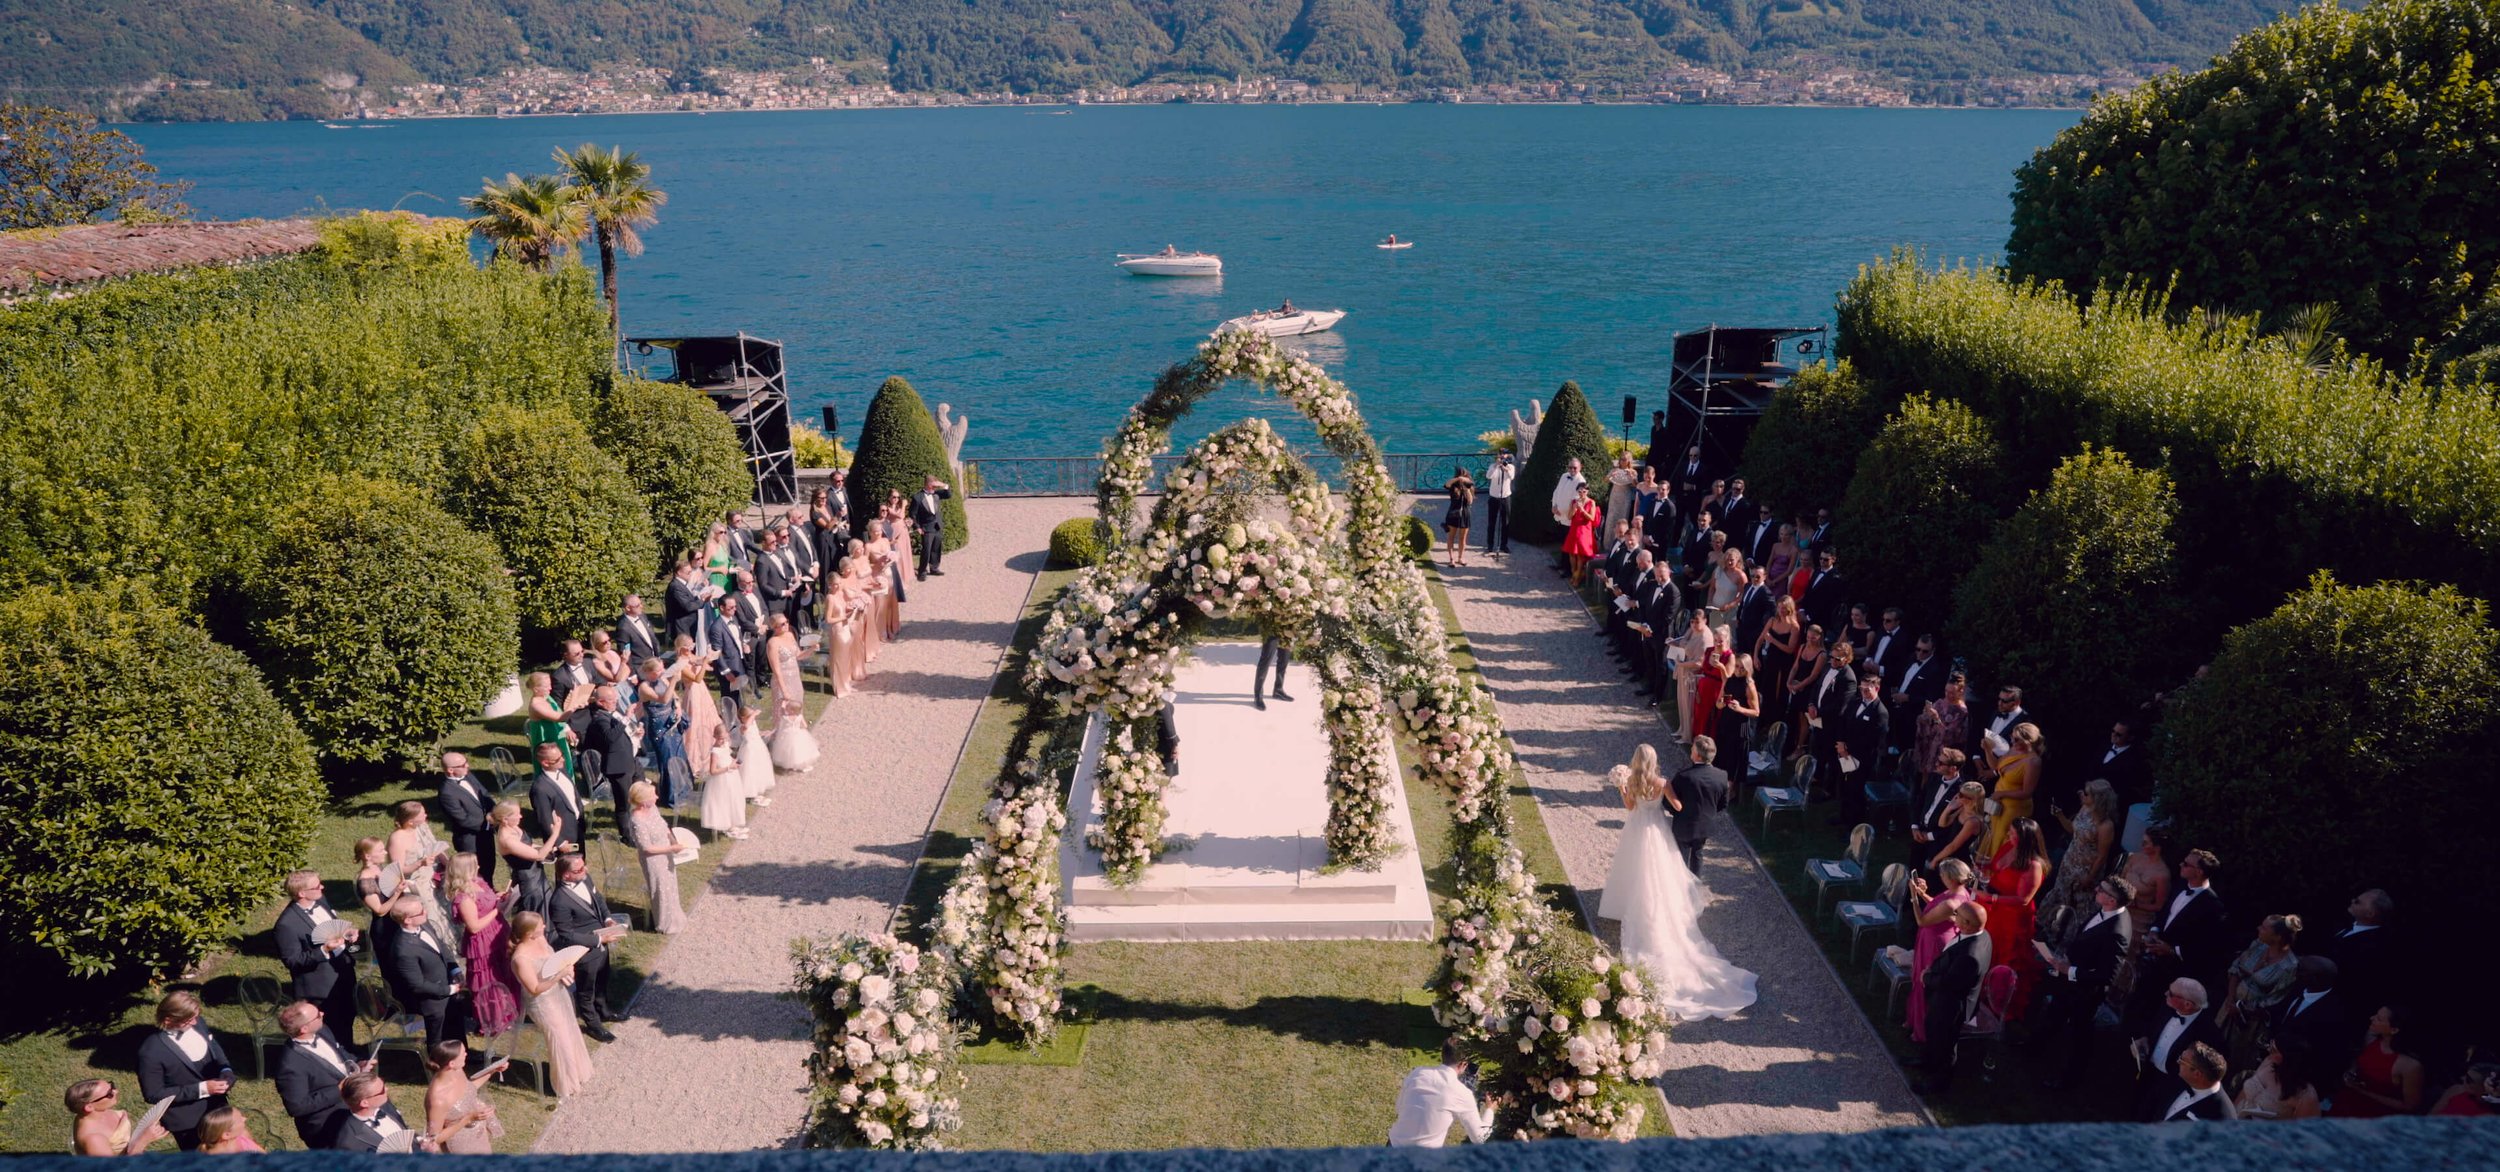 lake como Villa Balbiano luxury wedding gardens ceremony